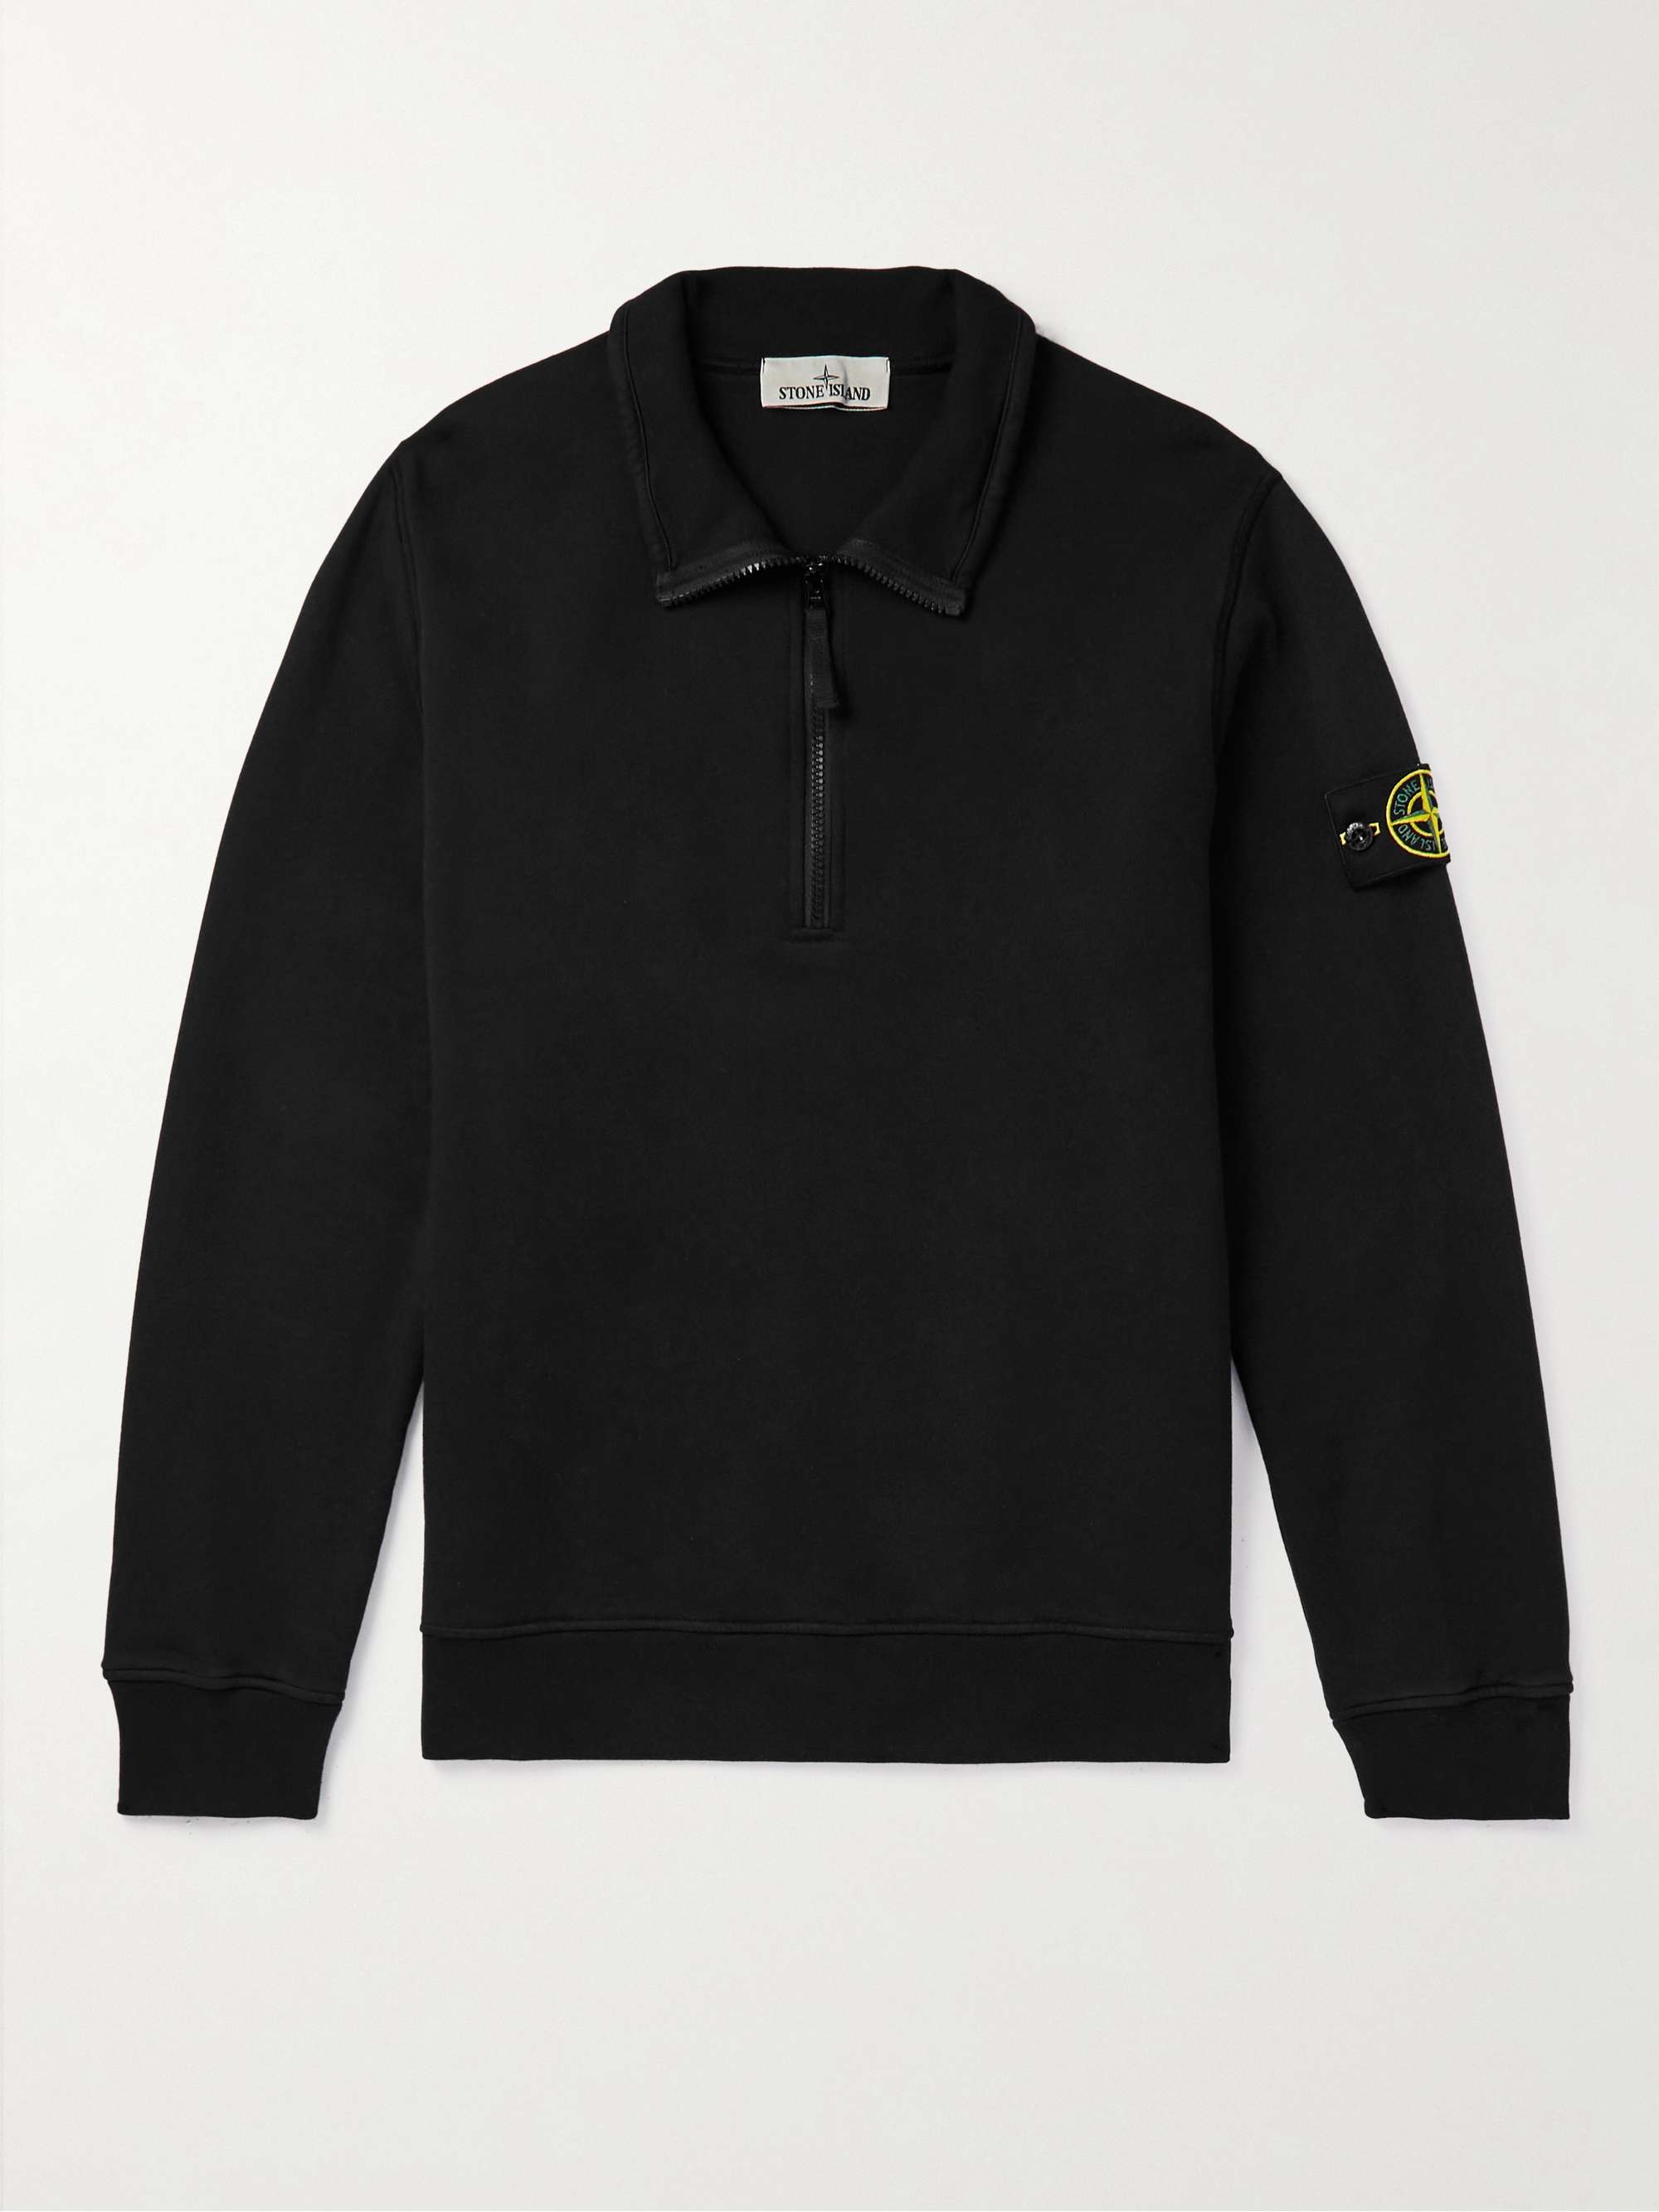 STONE ISLAND Logo-Appliqued Garment-Dyed Cotton-Jersey Half-Zip Sweatshirt,Black